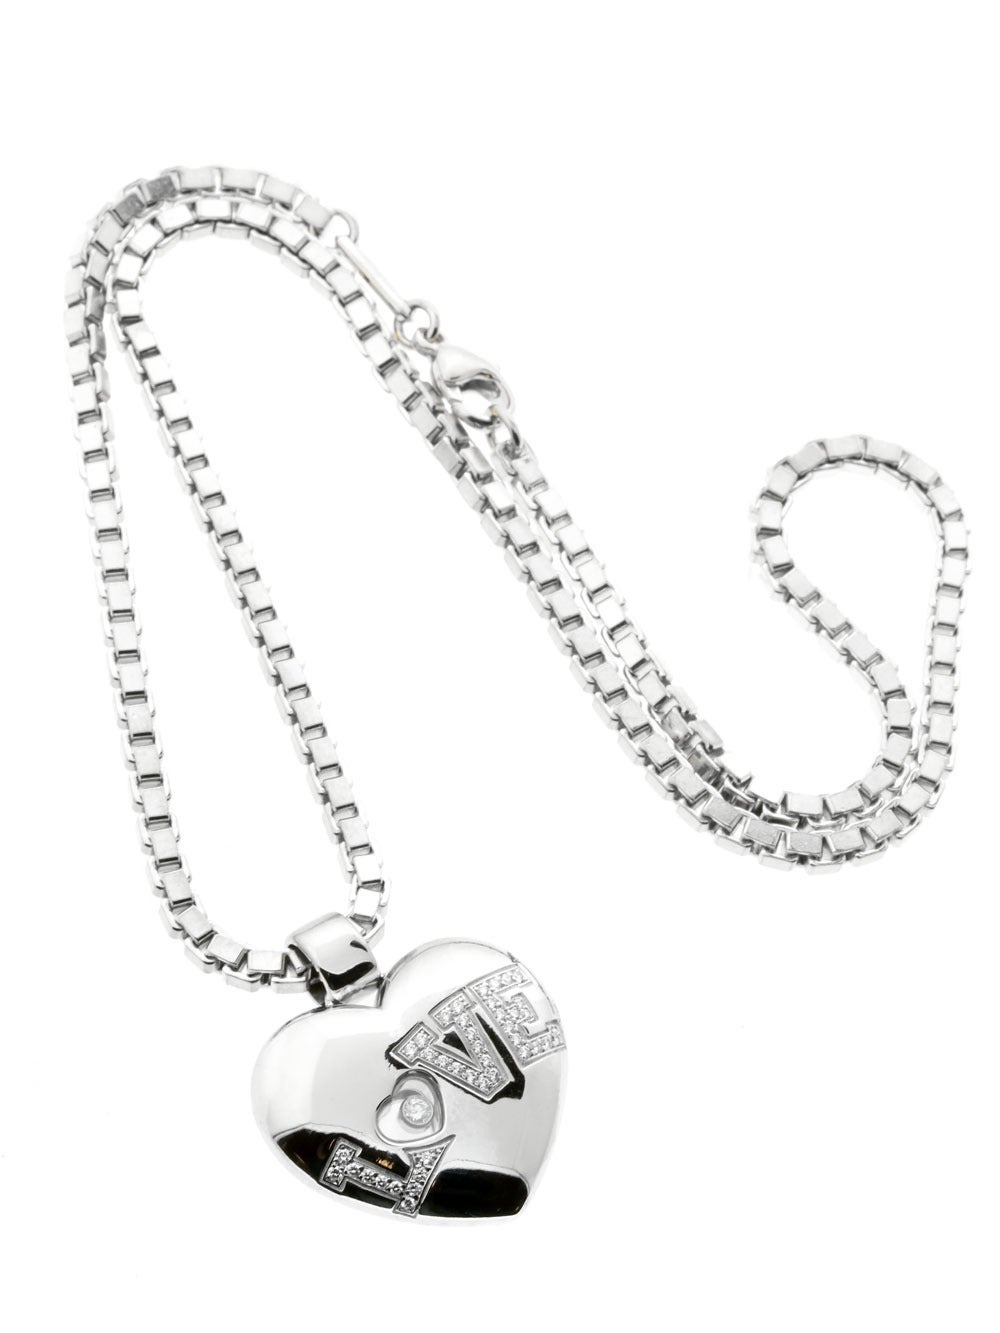 chopard love necklace